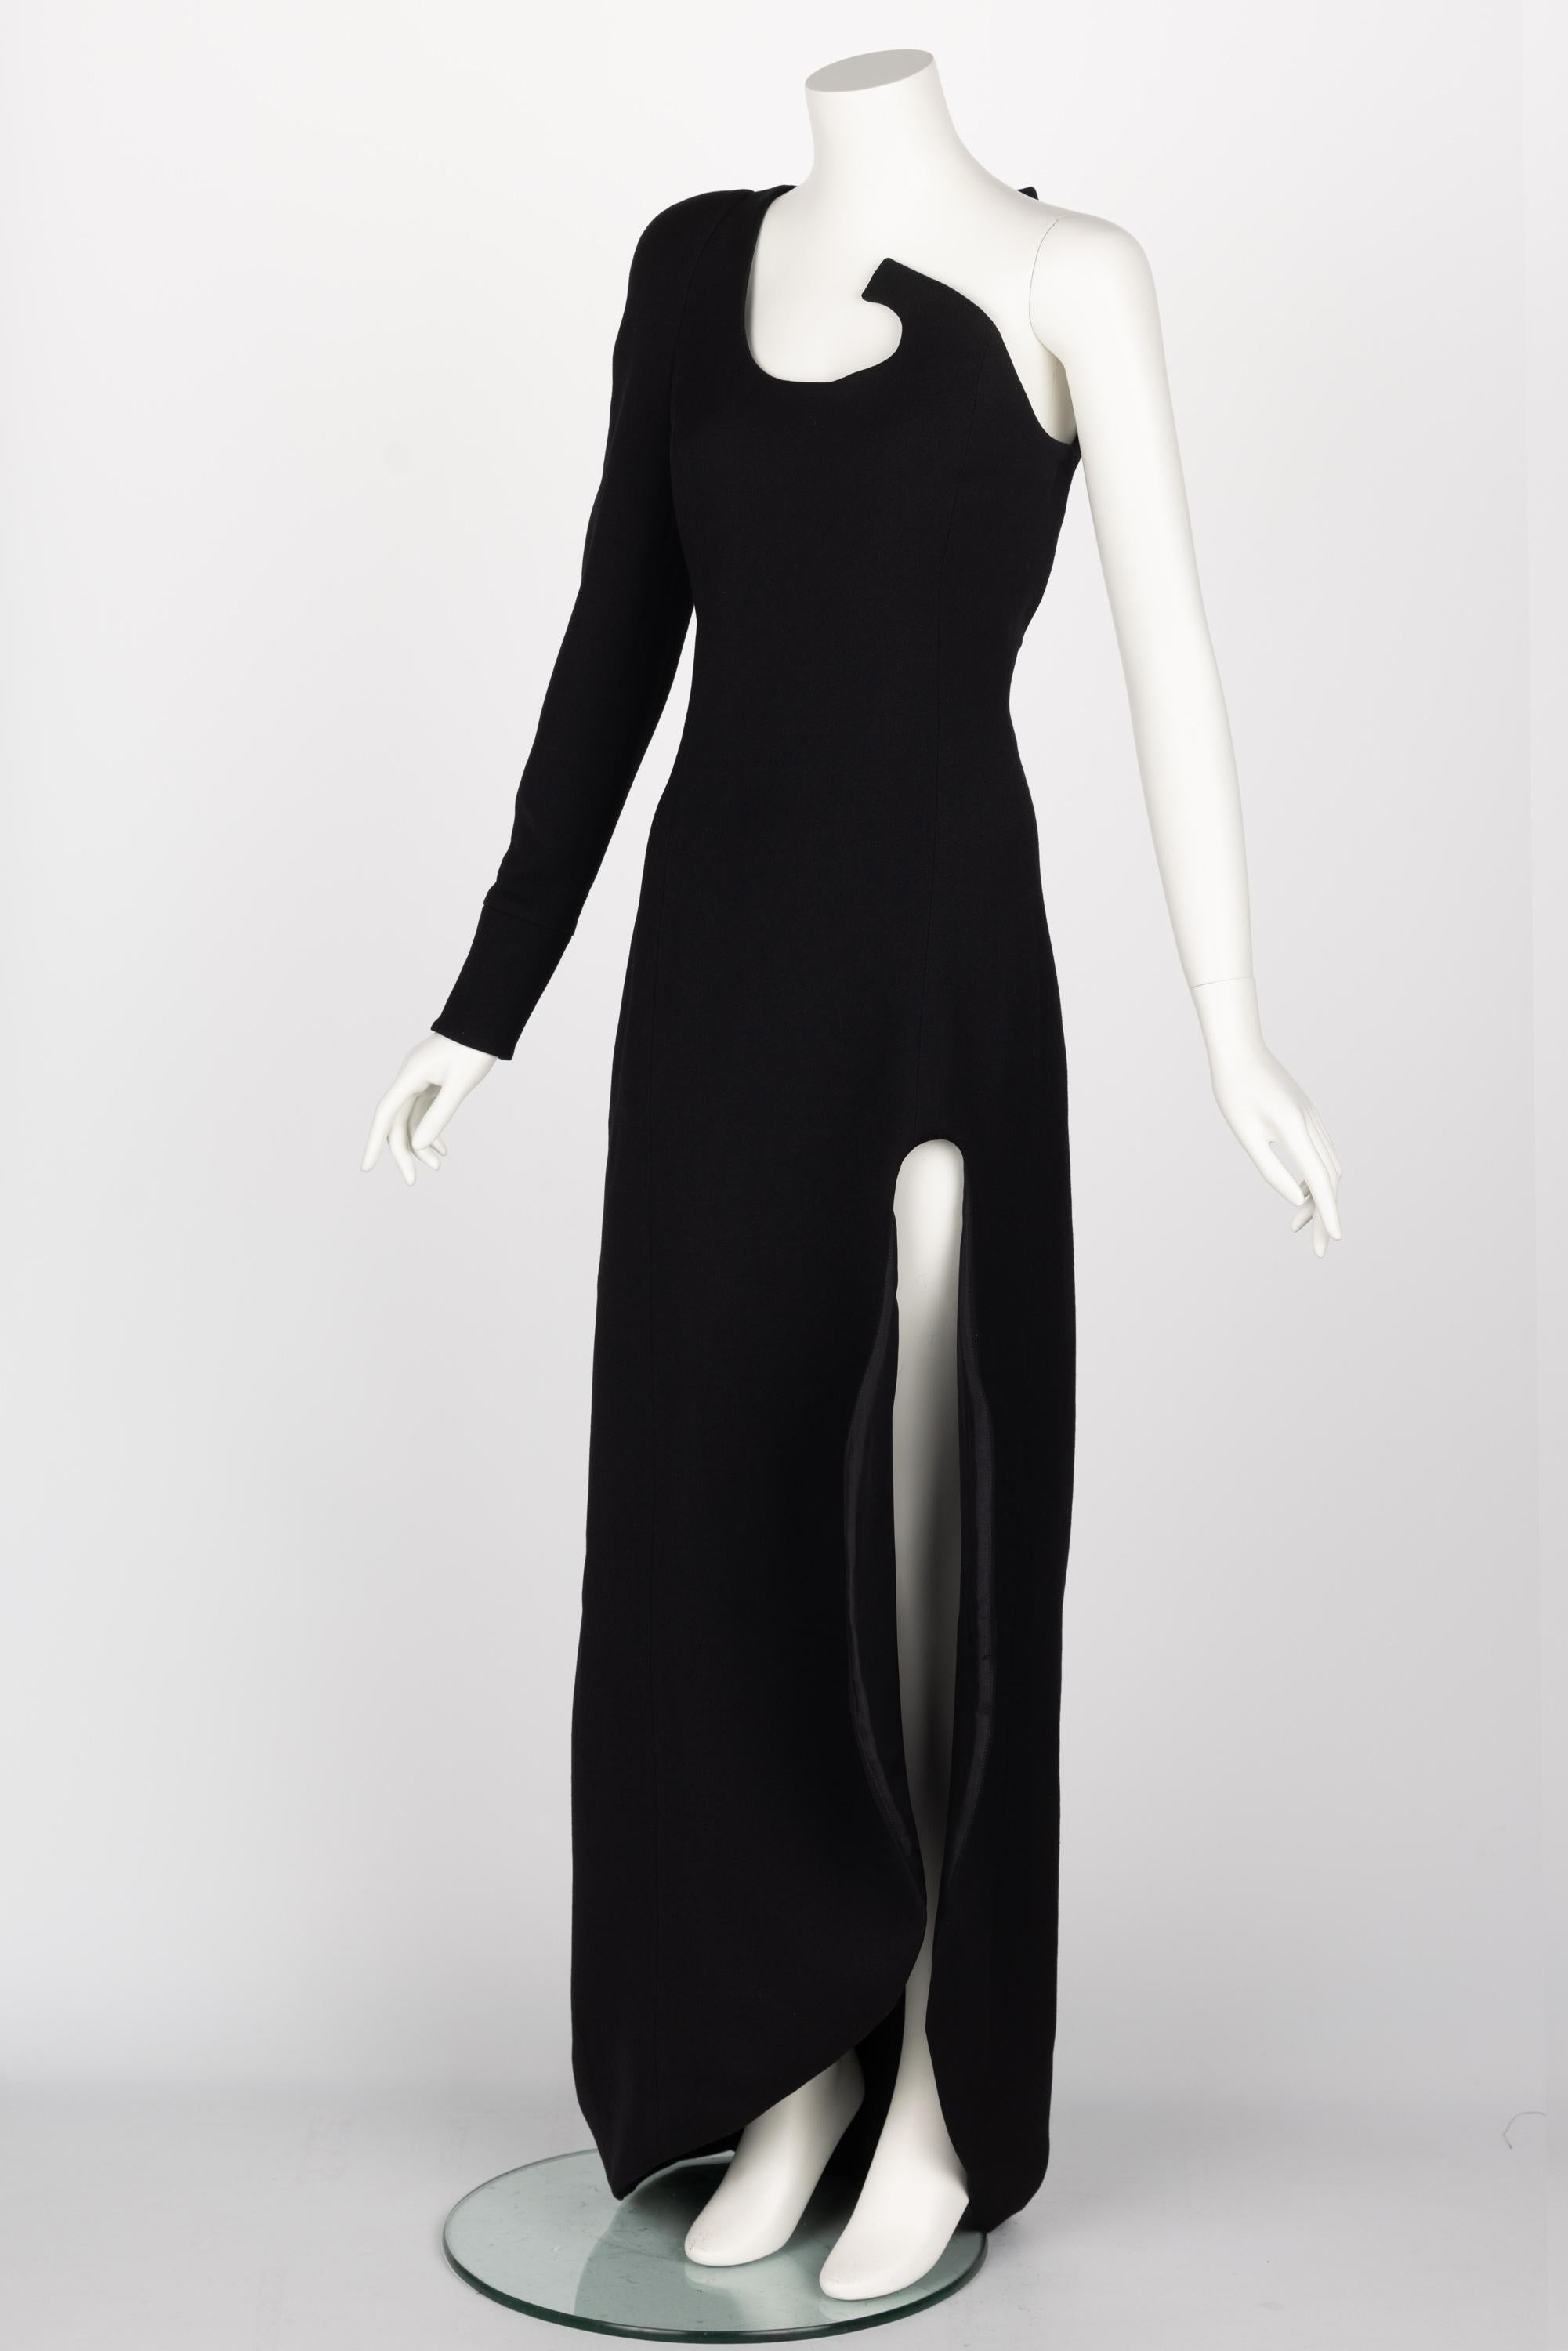 Ronald van der Kemp Demi Couture Fall 2018 Sculptural Black Dress  In Excellent Condition For Sale In Boca Raton, FL